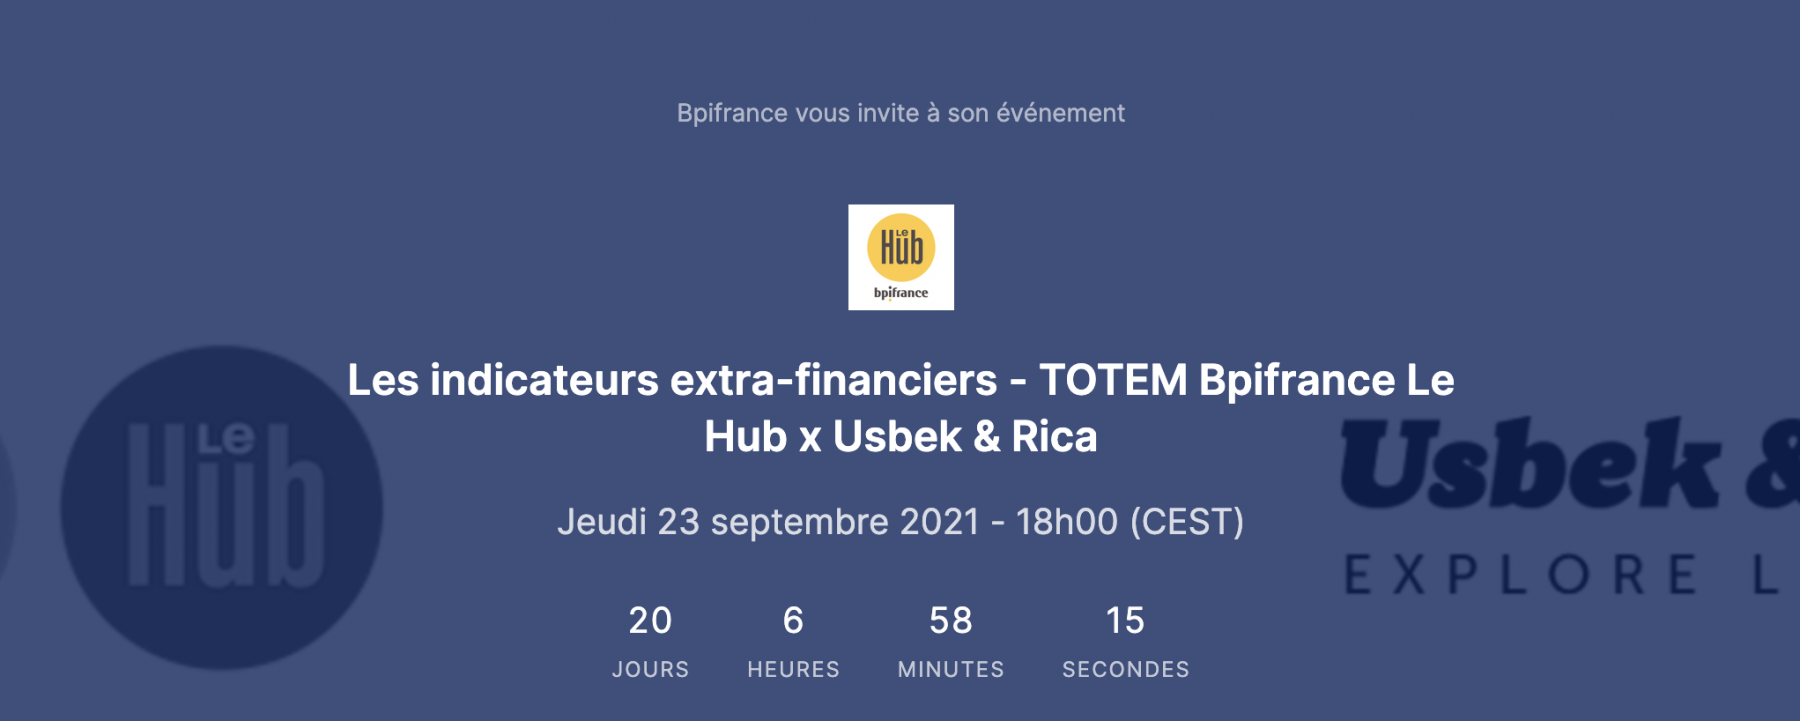 Les indicateurs extra-financiers - TOTEM Bpifrance Le Hub x Usbek & Rica le 23 septembre 2021